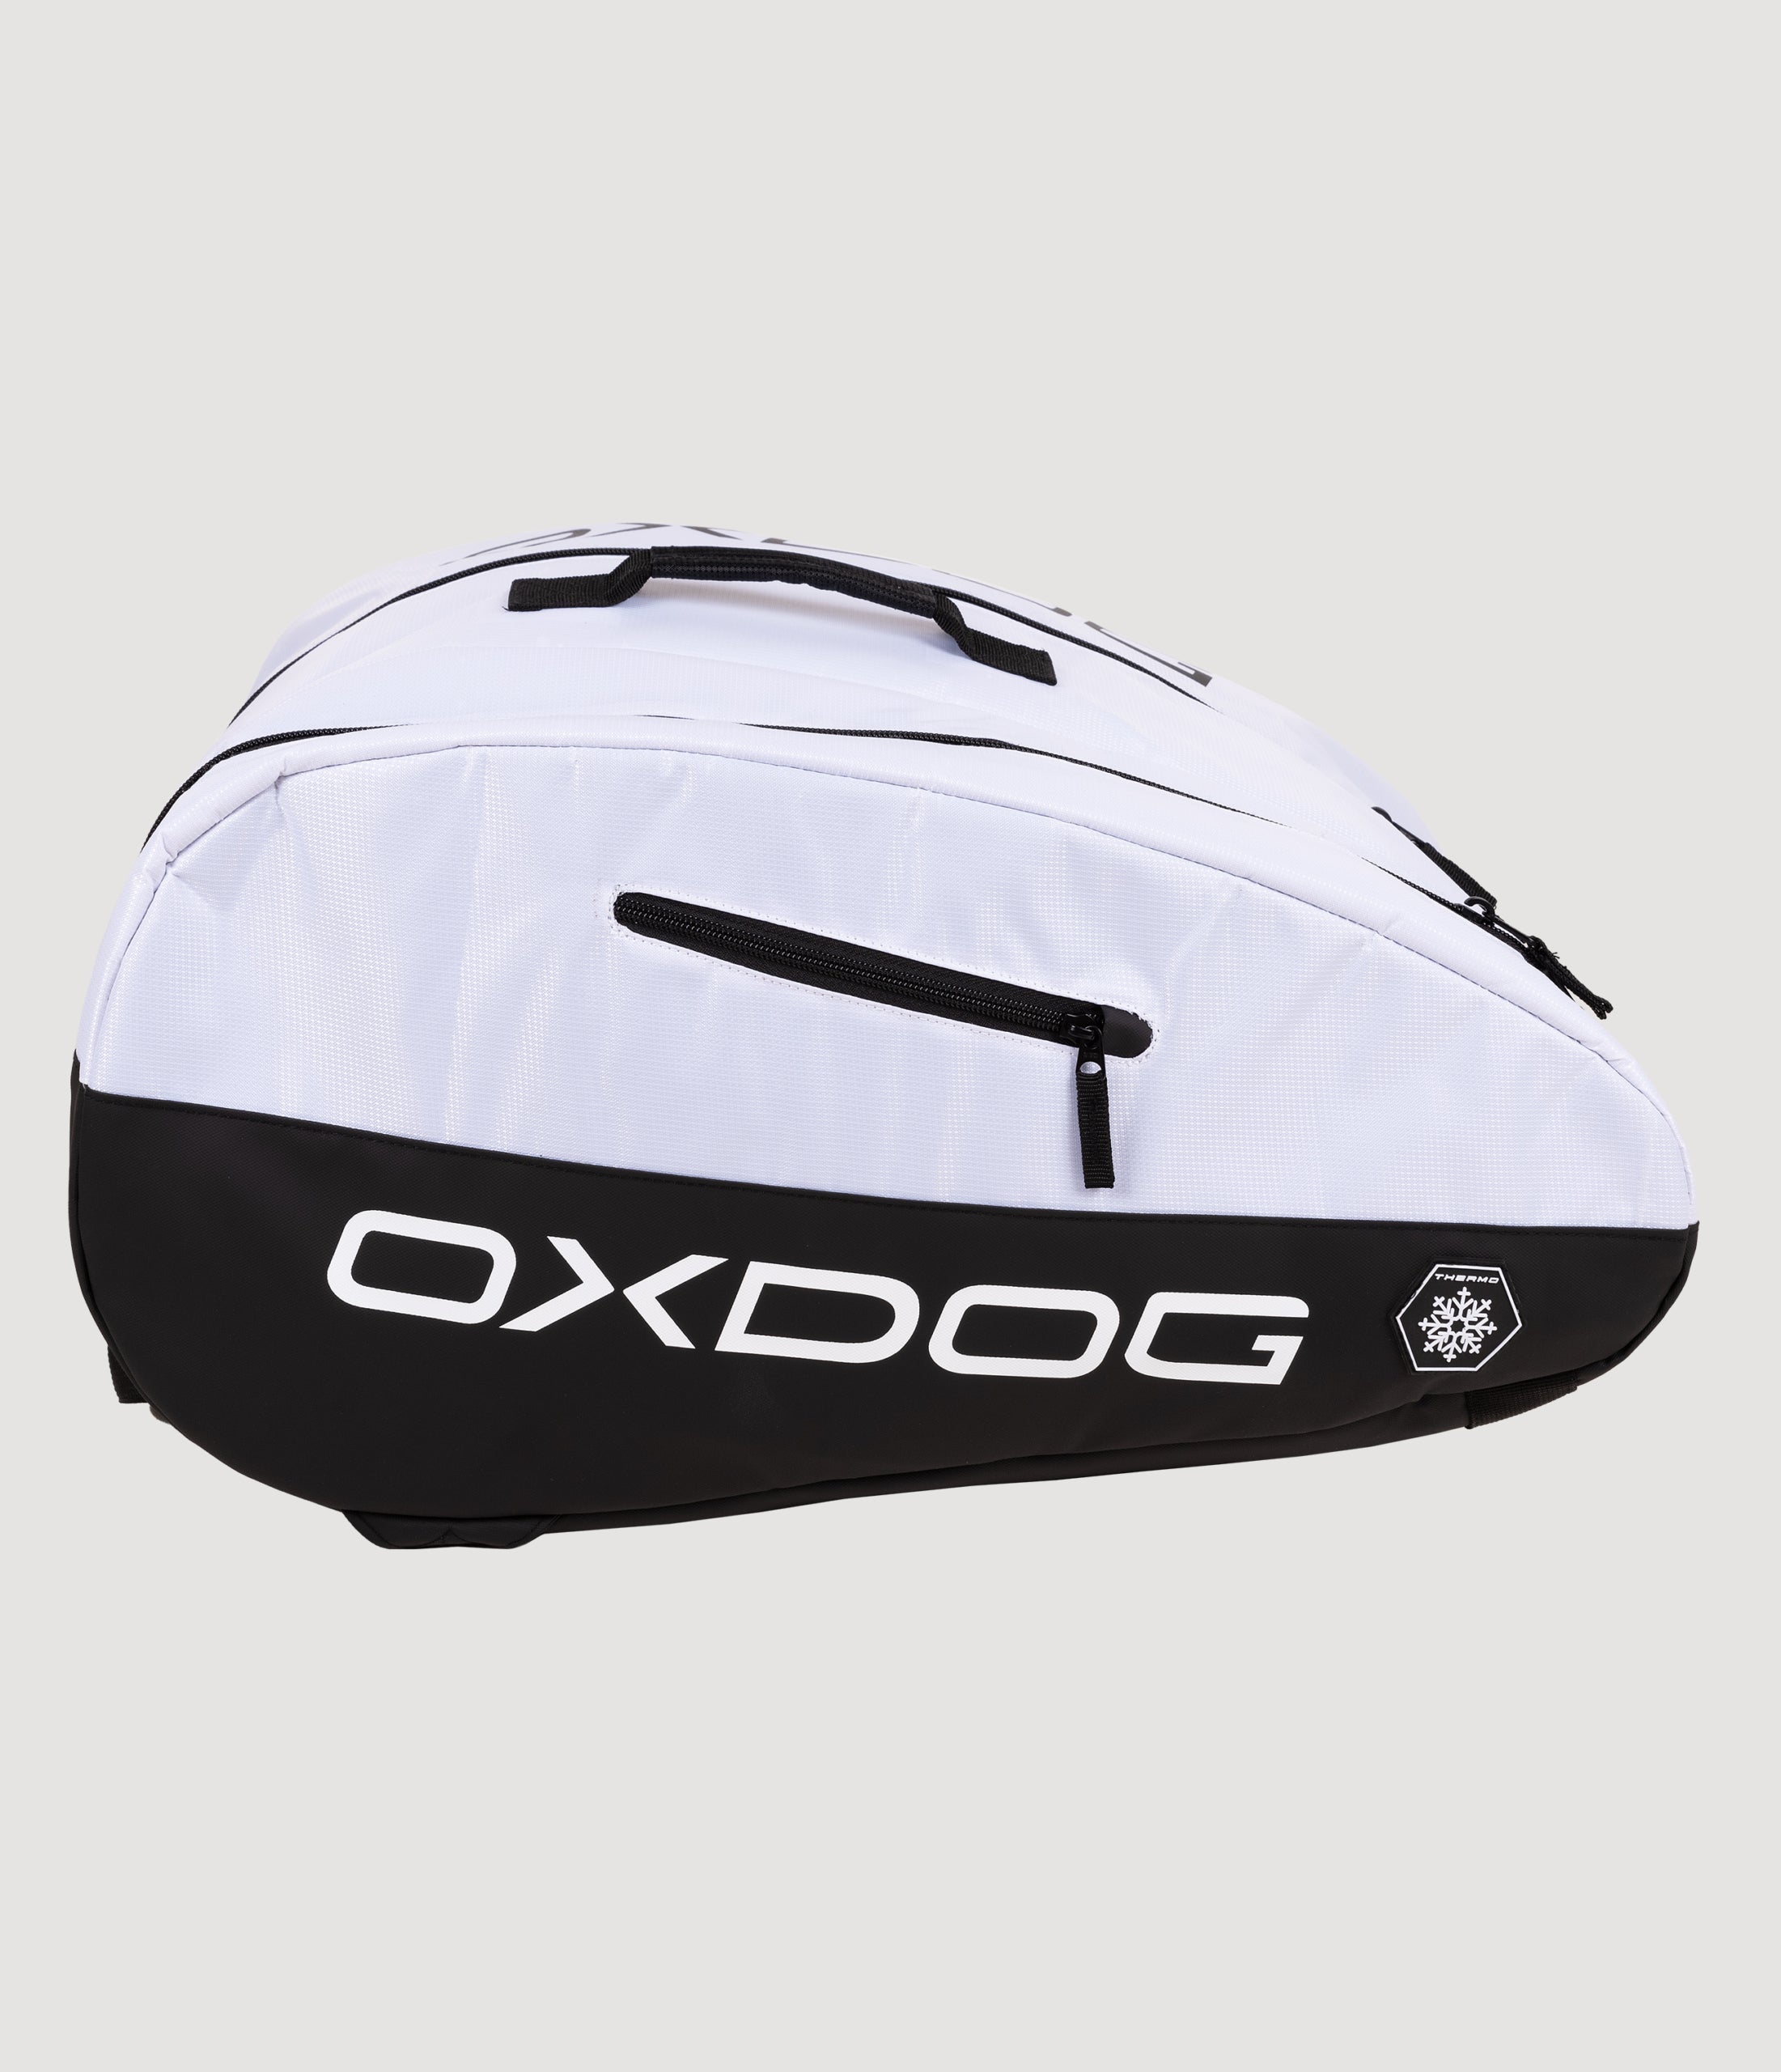 Oxdog Ultra Tour Pro Thermo Padel Bag (White/black)